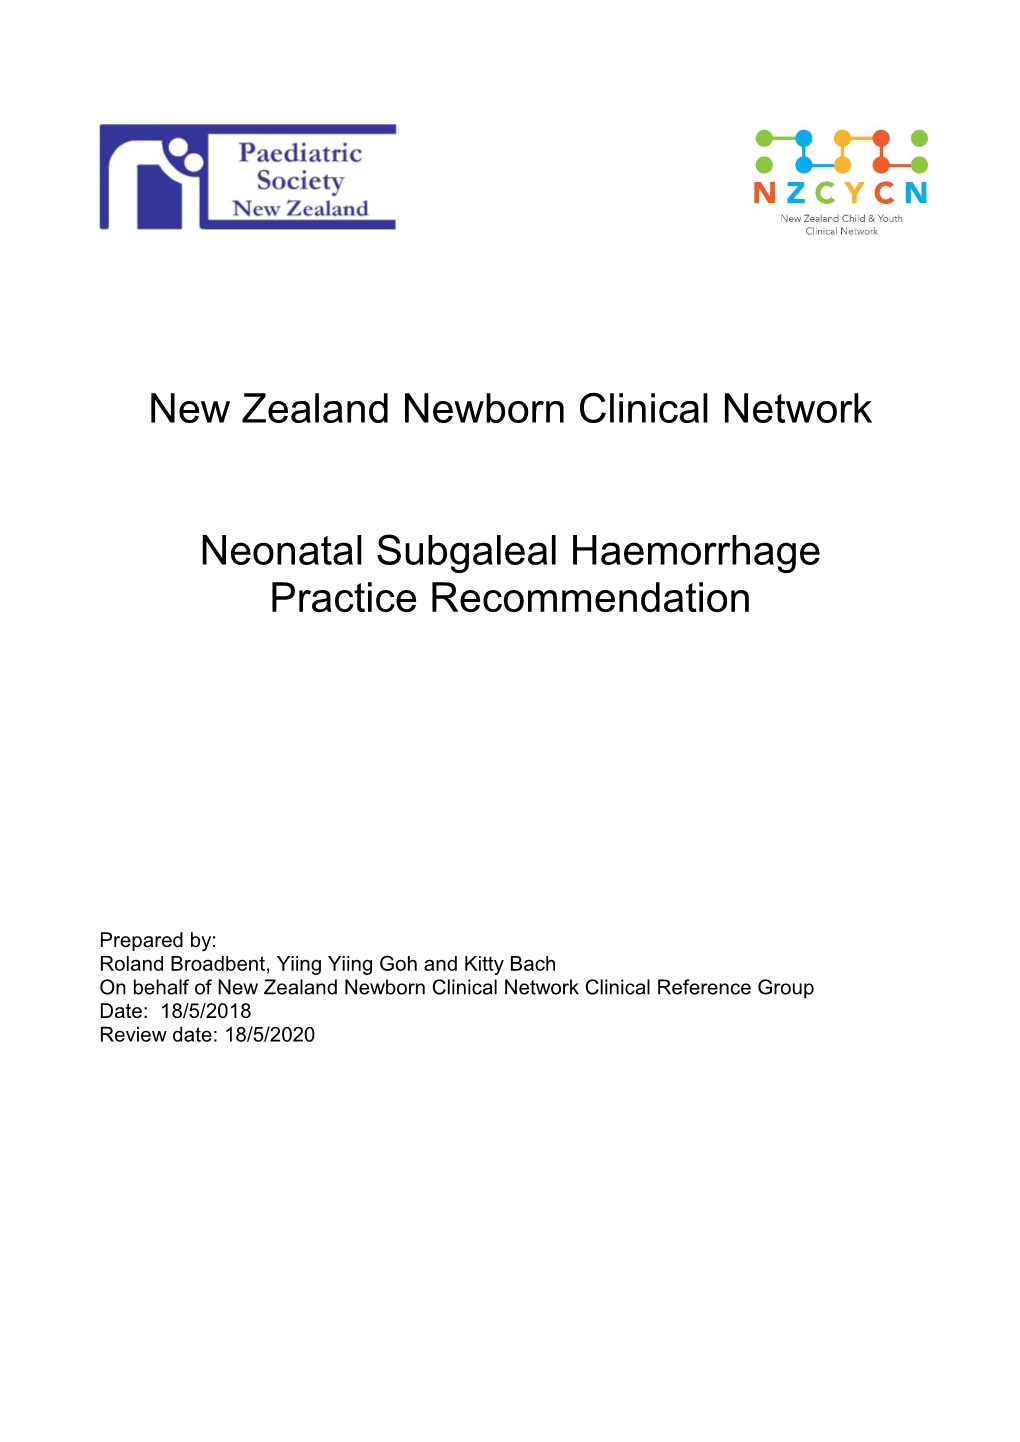 Neonatal Subgaleal Haemorrhage Practice Recommendation